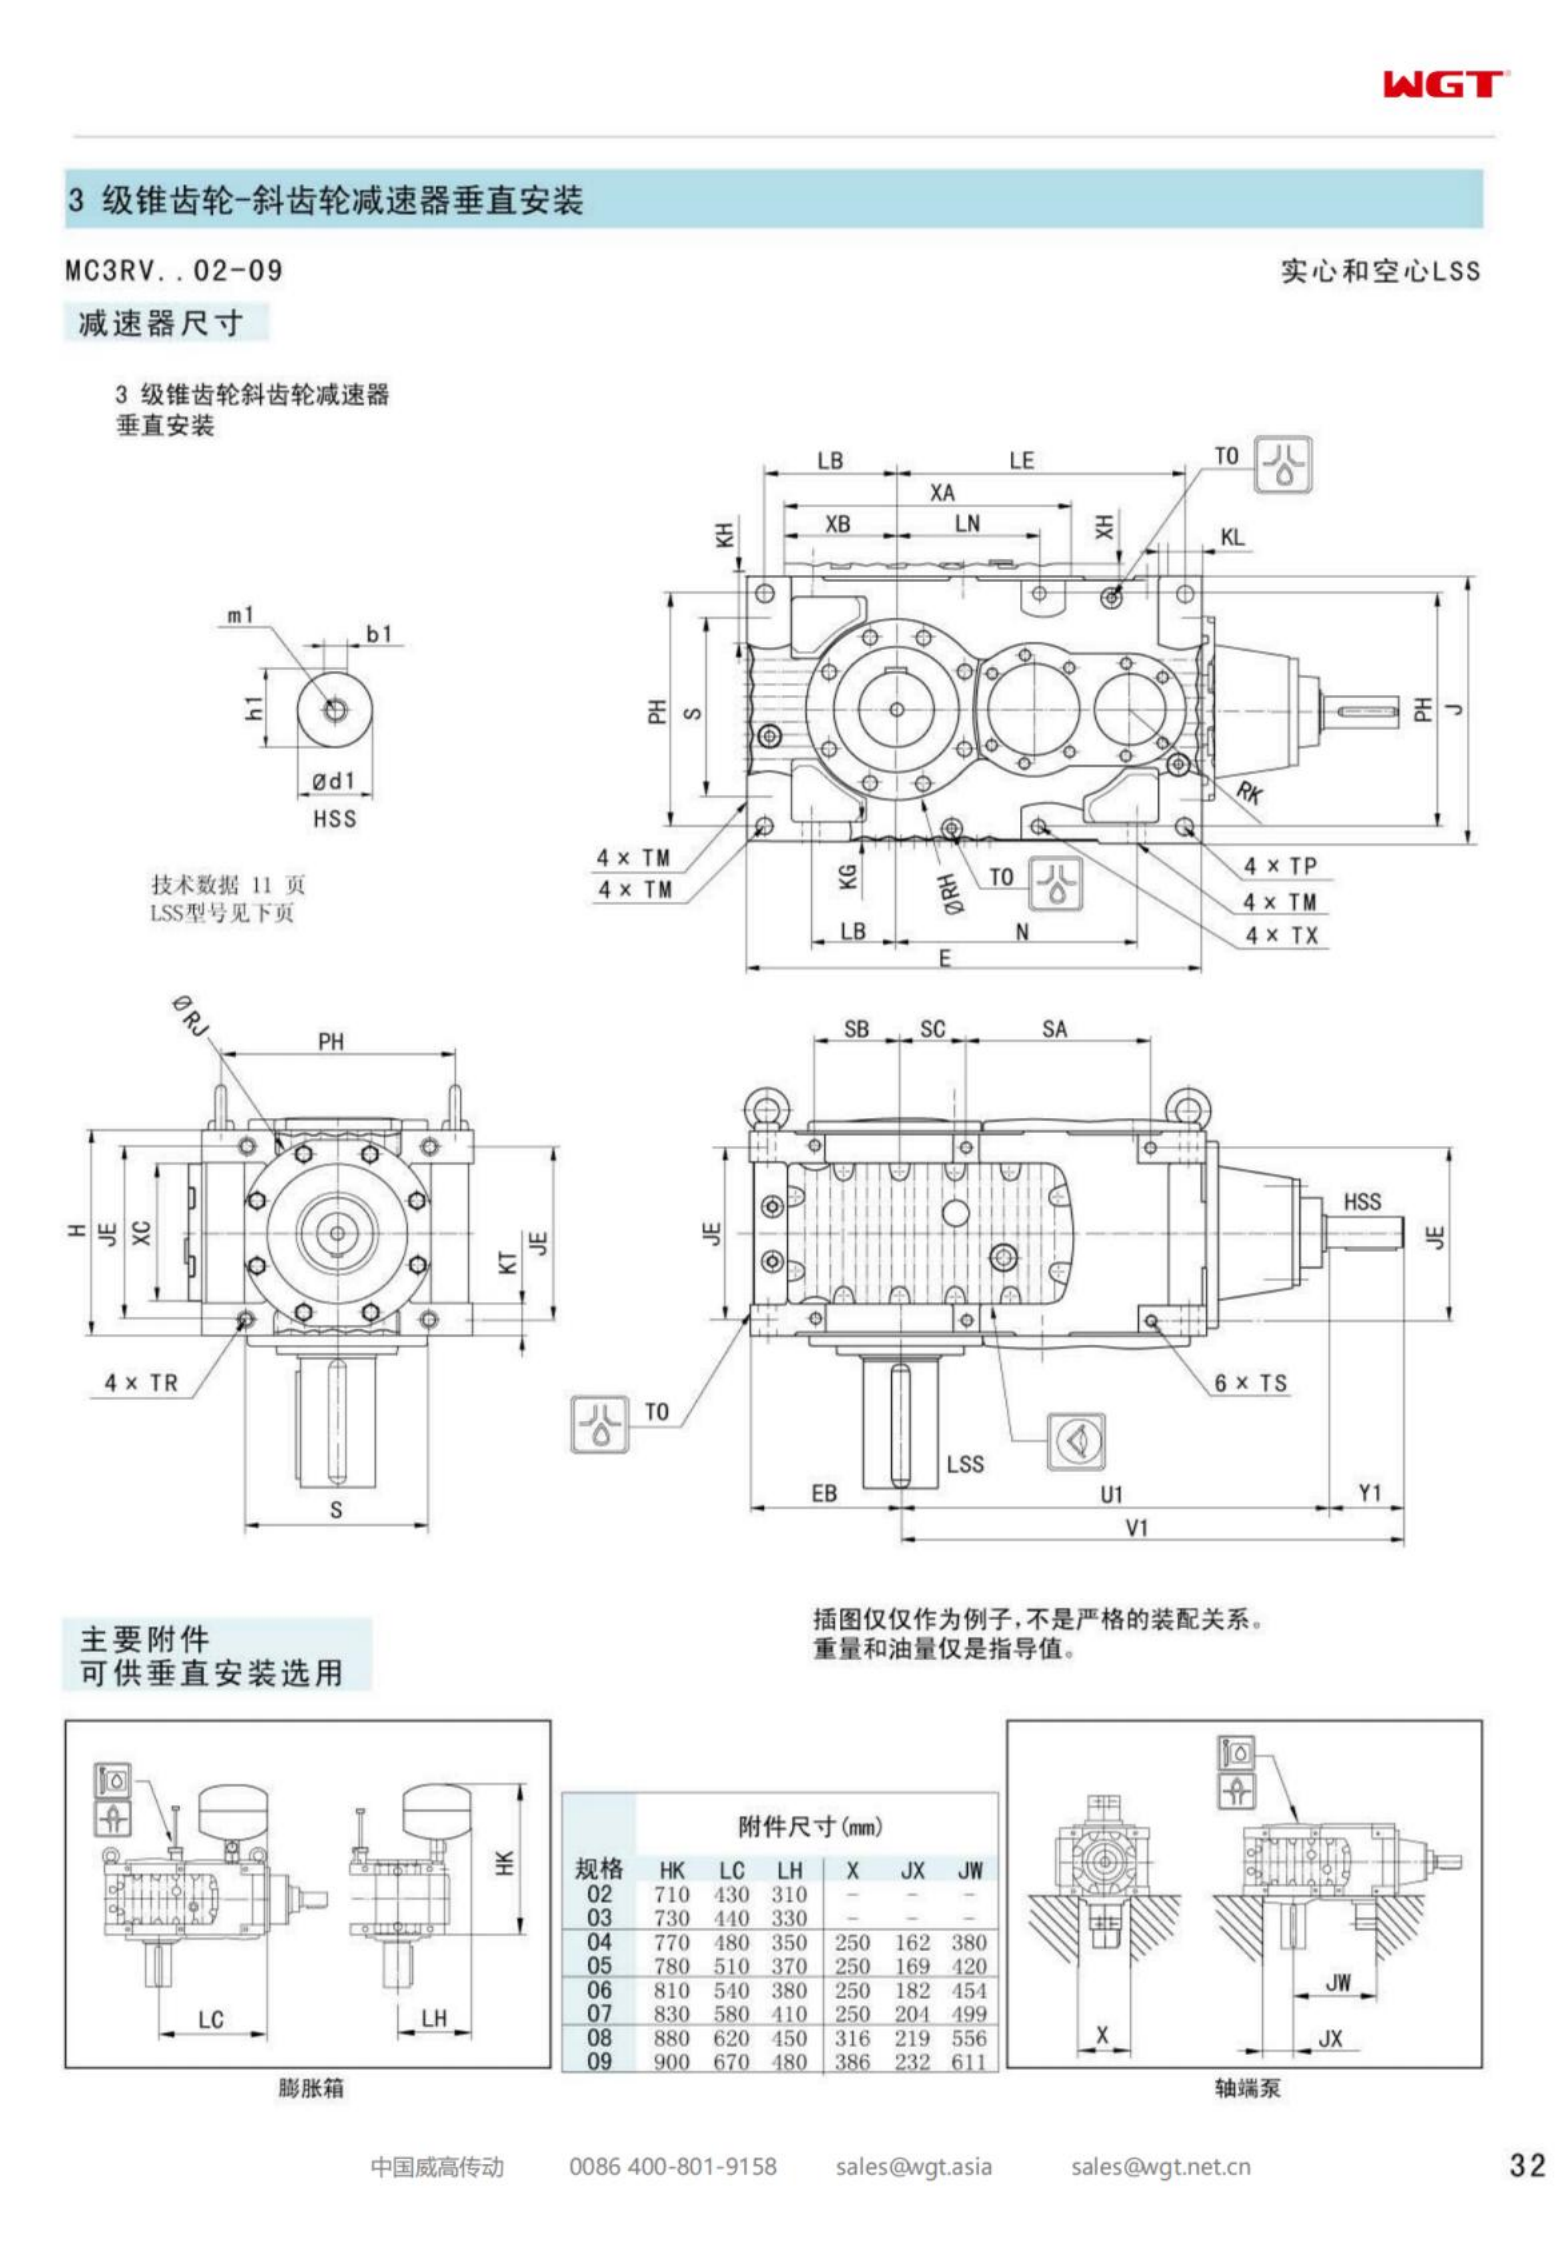 MC3RVHF06 replaces _SEW_MC_Series gearbox (patent)